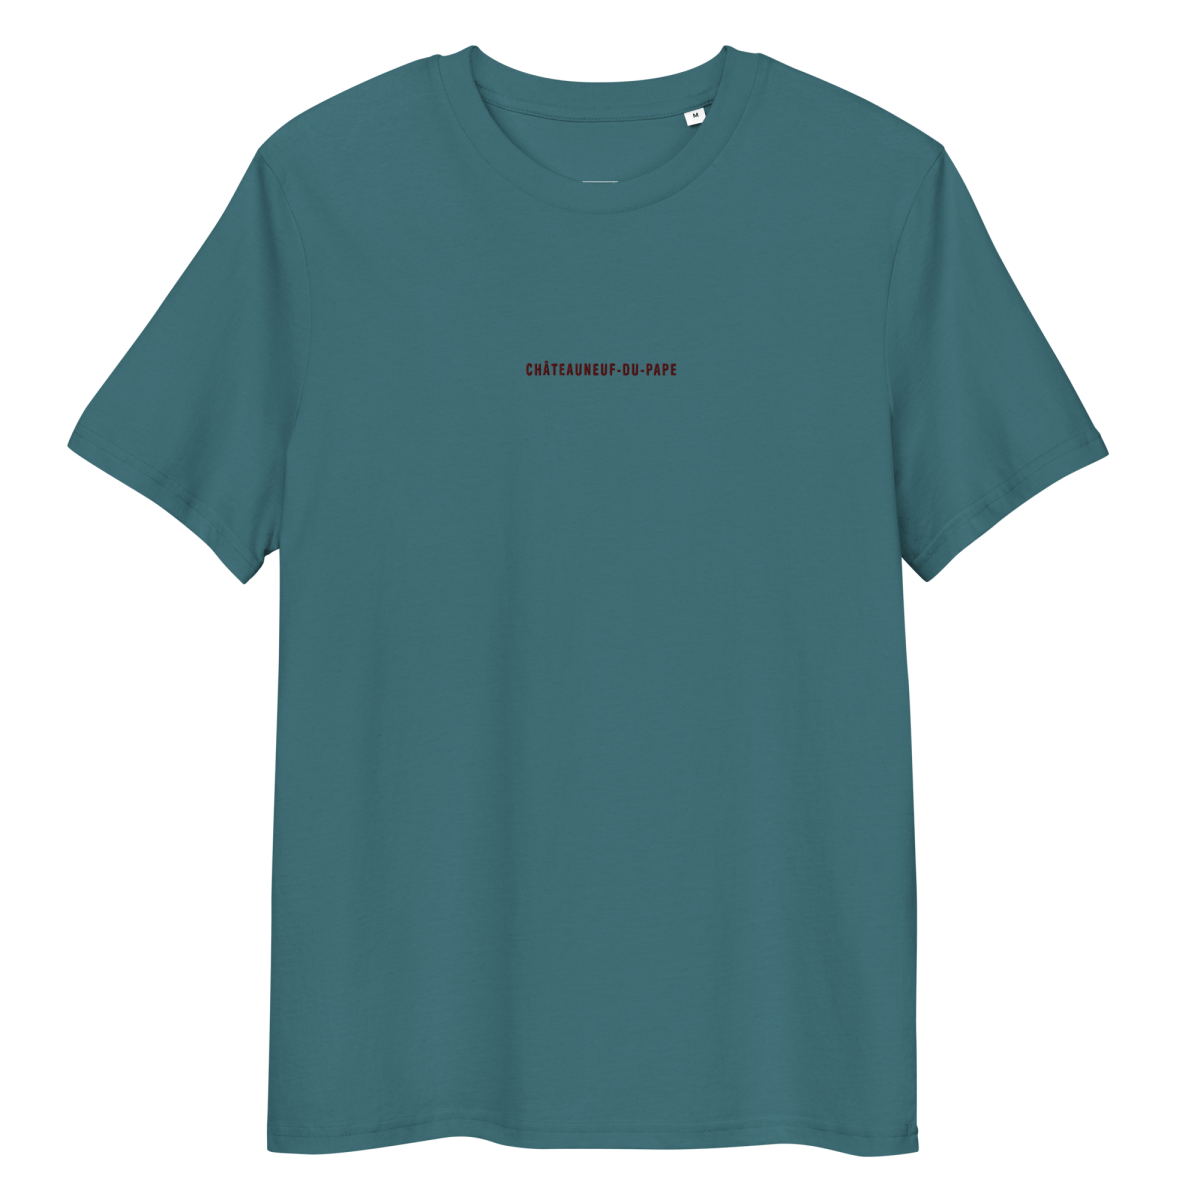 The Châteauneuf-du-Pape organic t-shirt